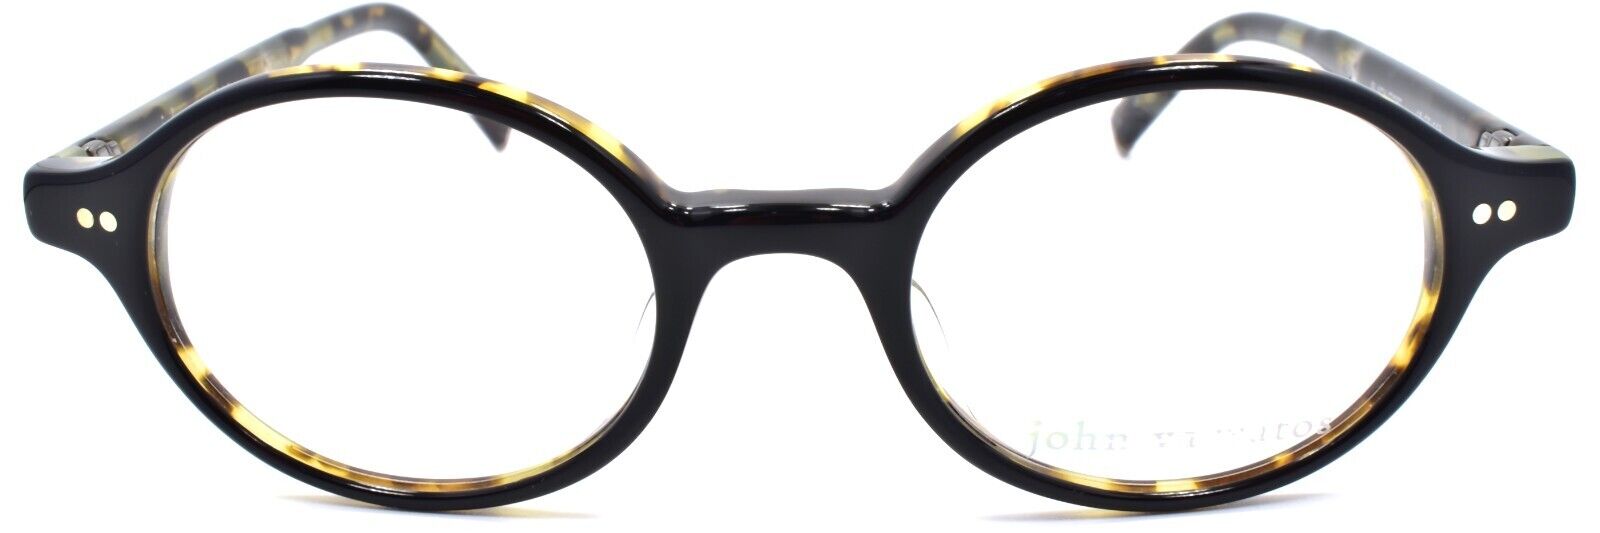 2-John Varvatos V206 UF Eyeglasses Frames Small 46-20-145 Black / Tortoise Japan-751286293210-IKSpecs